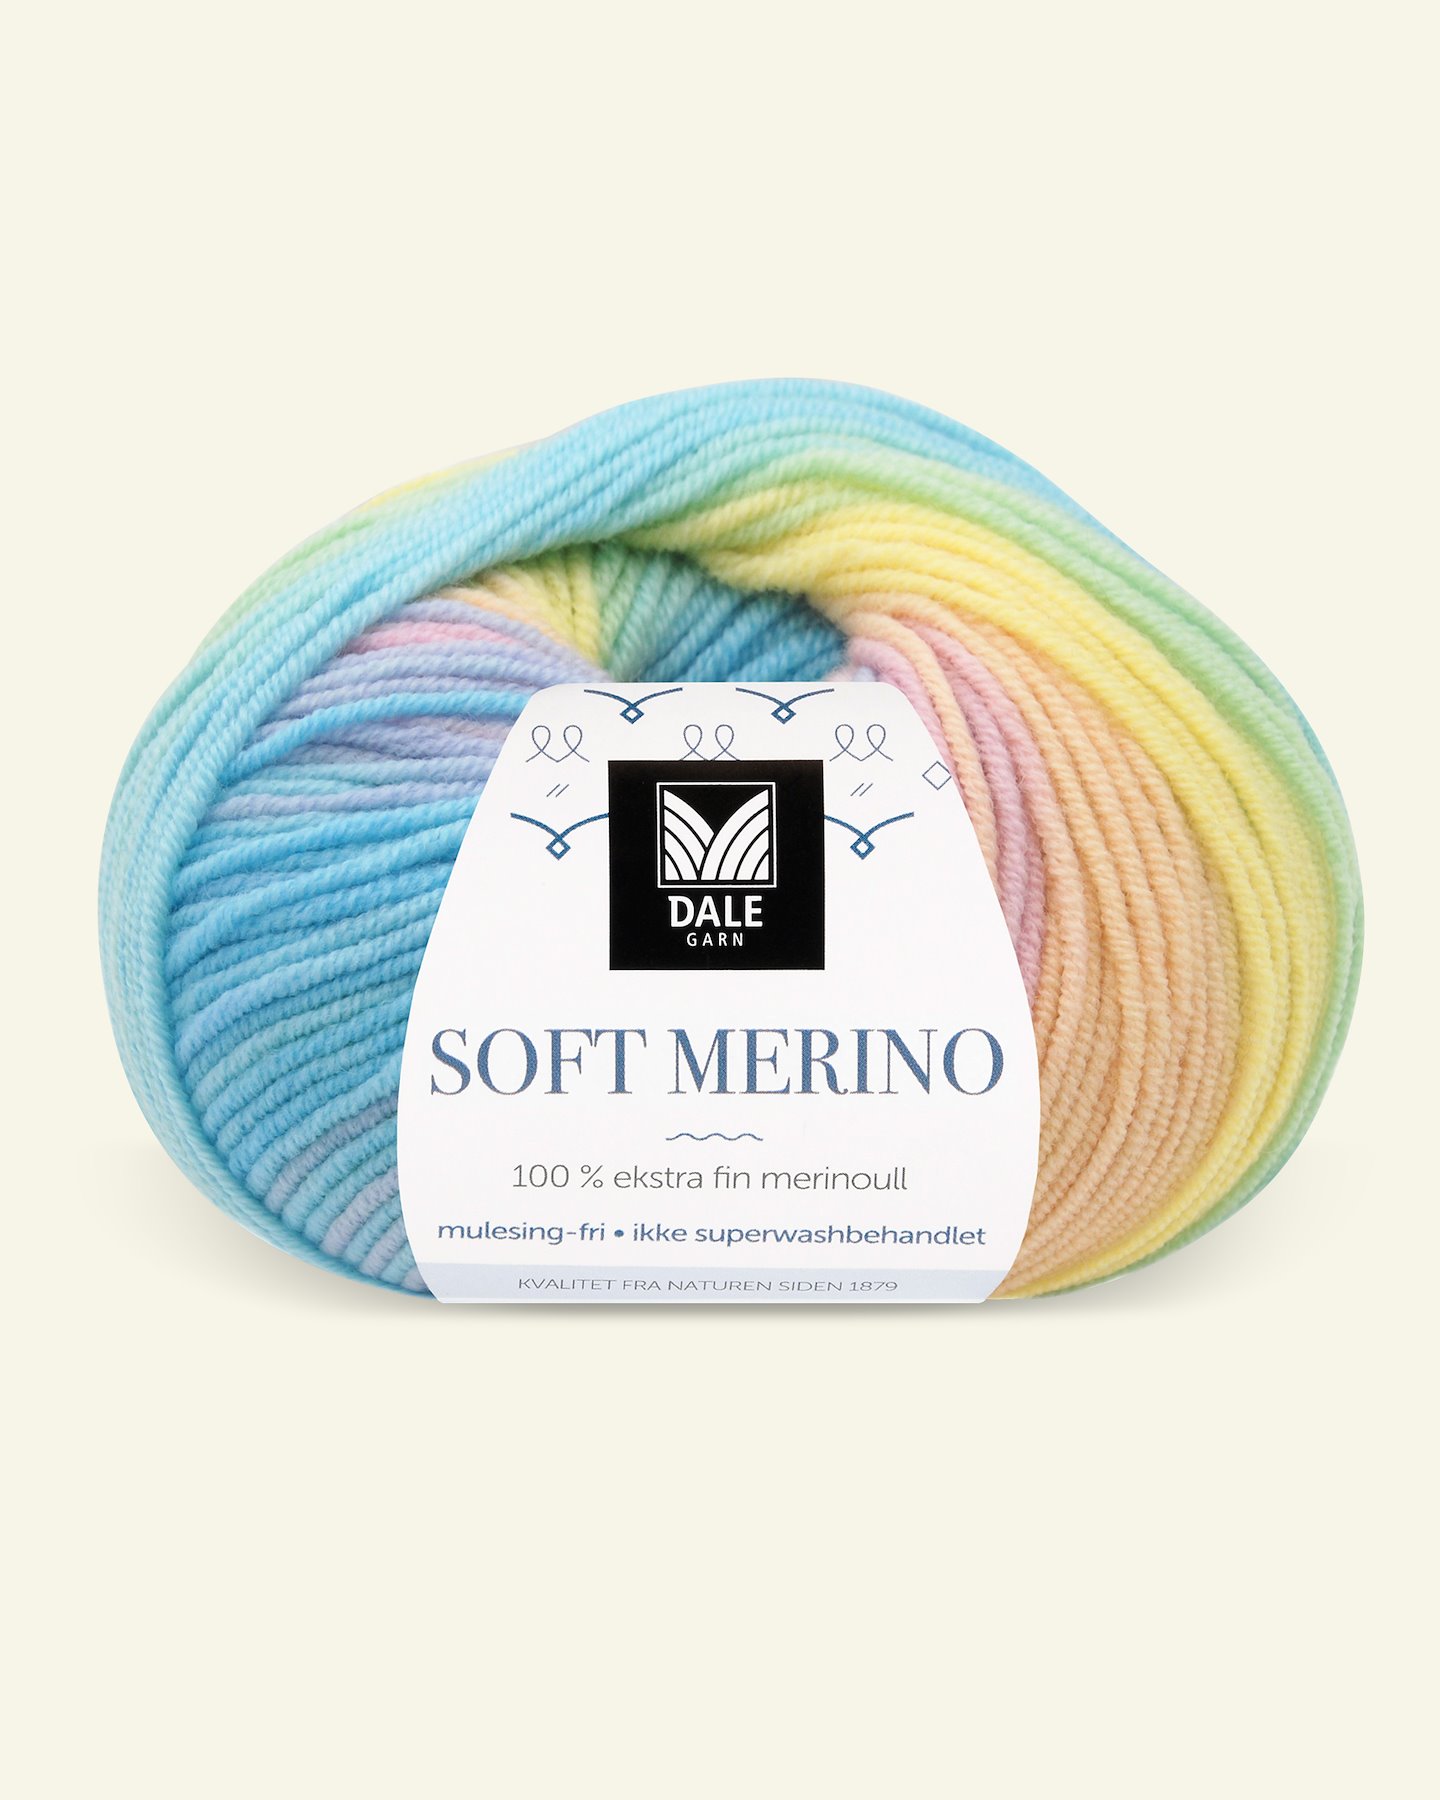 Dale Garn, 100% extra fine merino wool yarn "Soft Merino", pastel printed 90001221_pack